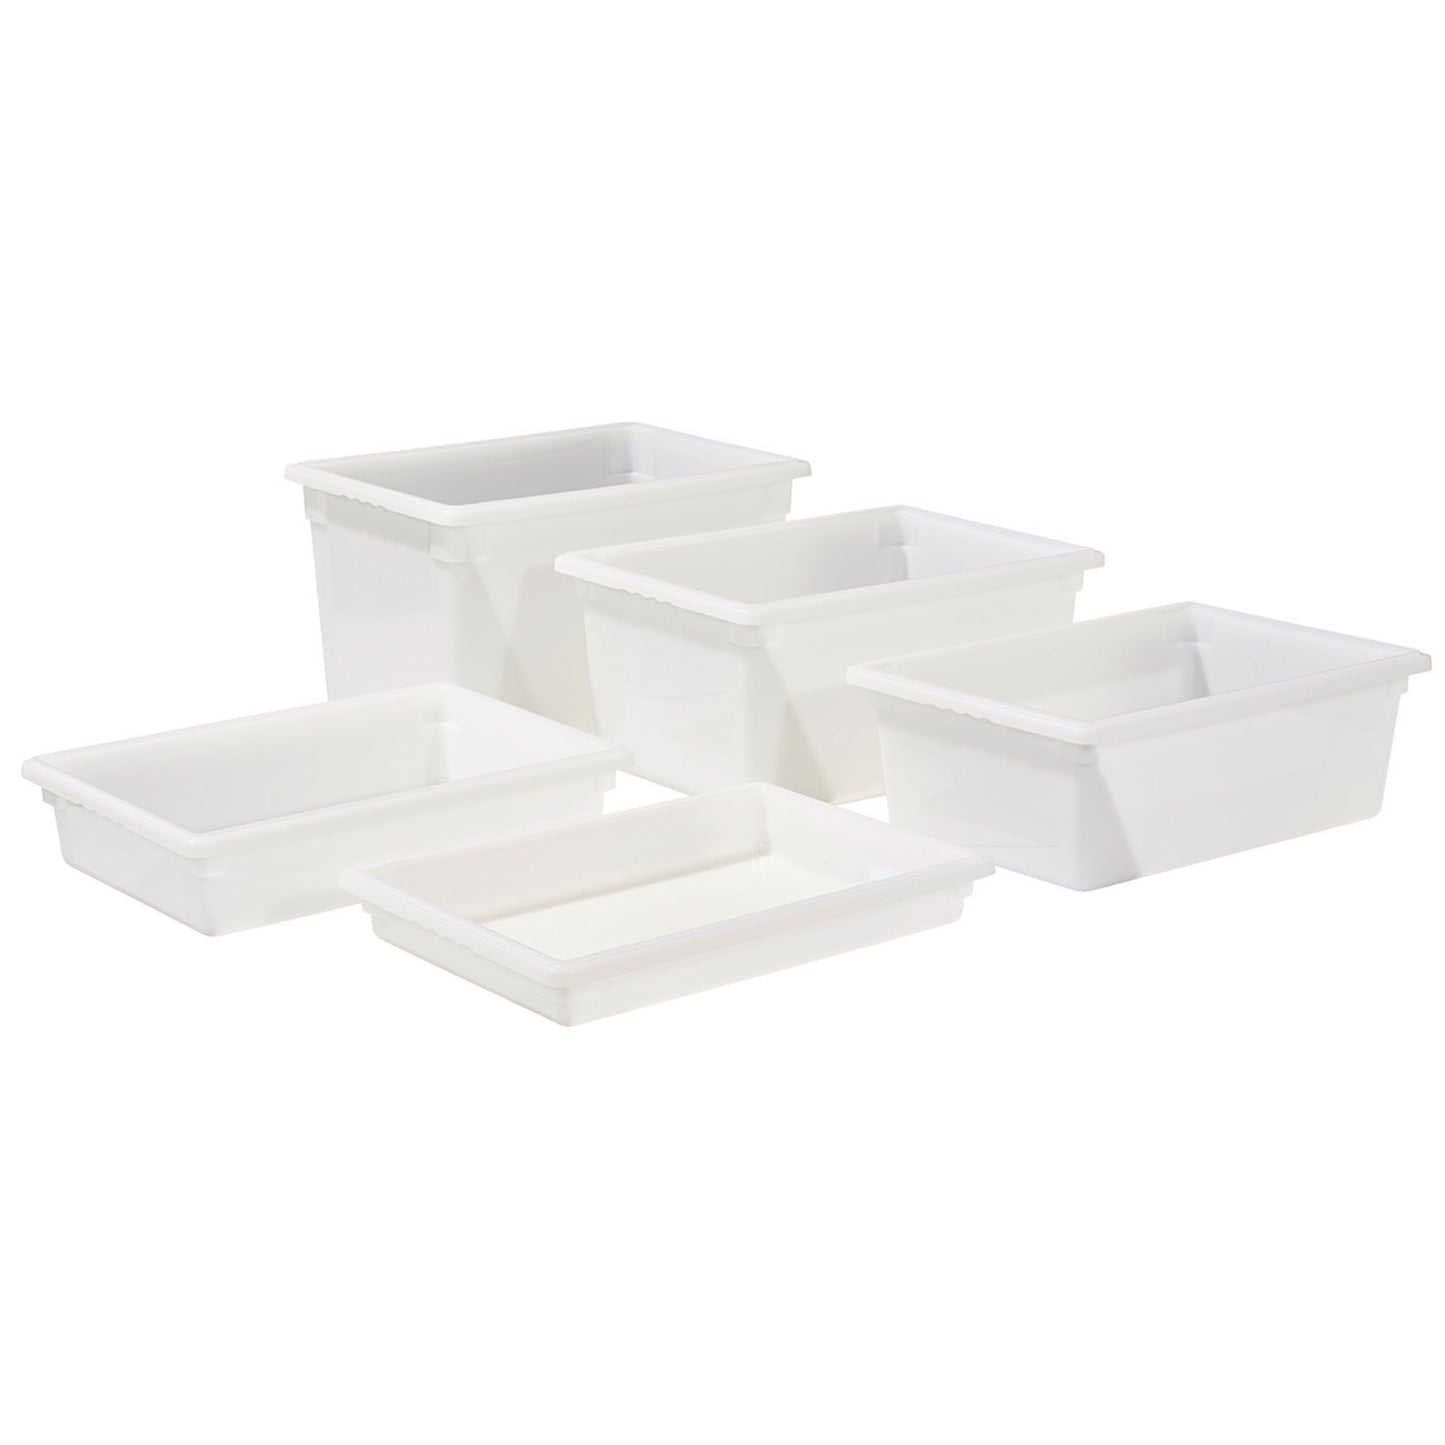 PFFW-15 - Food Storage Box, White Polypropylene - Full, 15"